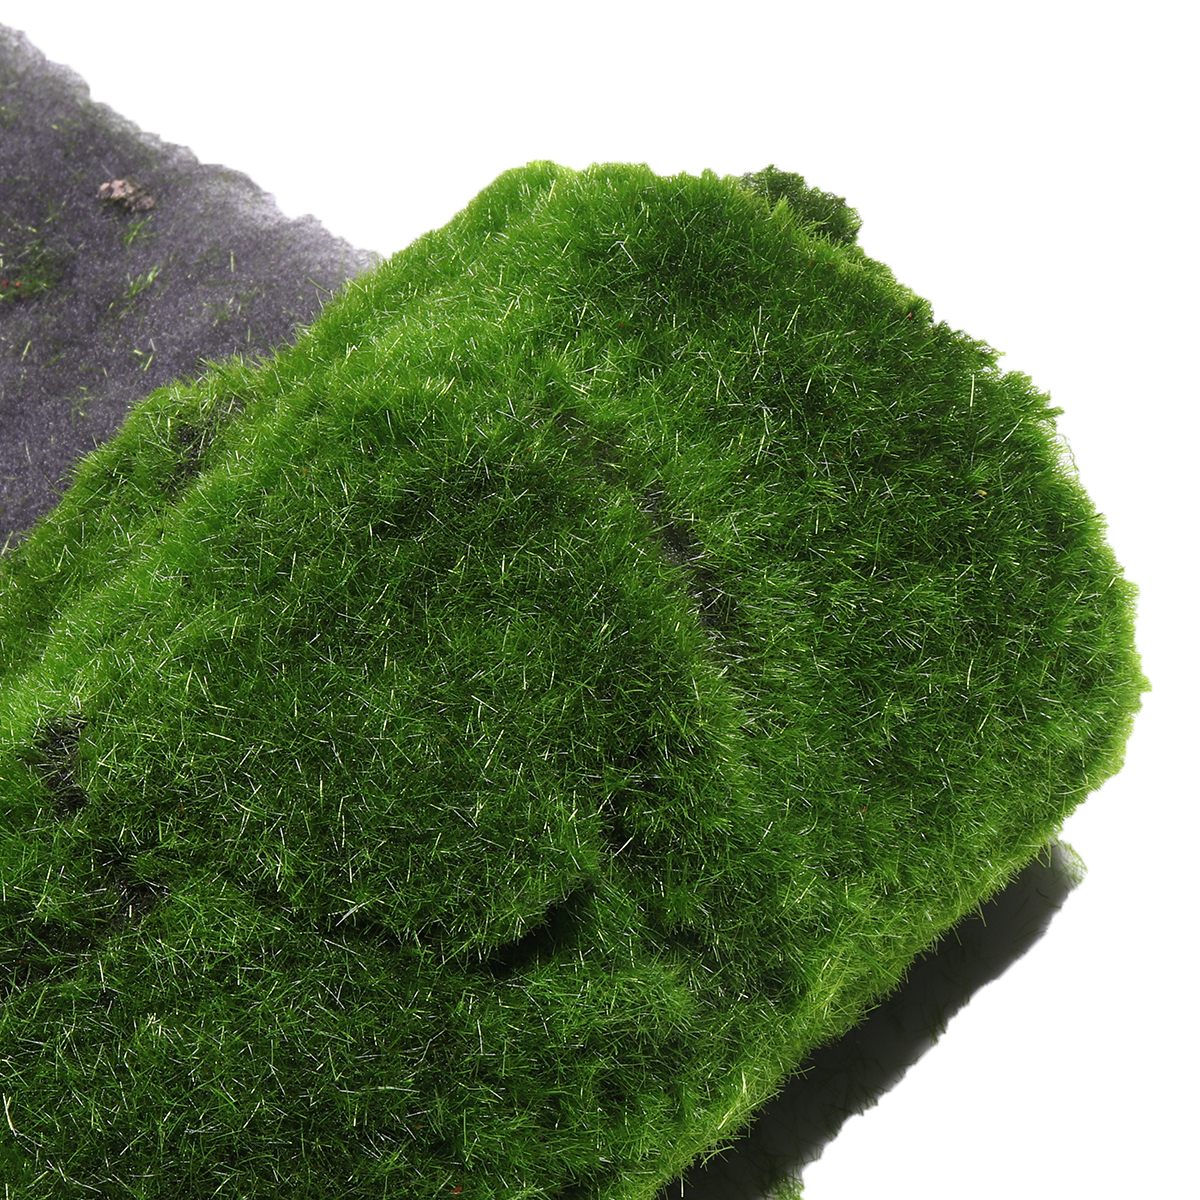 Artificial-Moss-Mat-DIY-Landscape-Flat-Grass-Lawn-Turf-Plants-Shop-Home-Decor-1825556-11